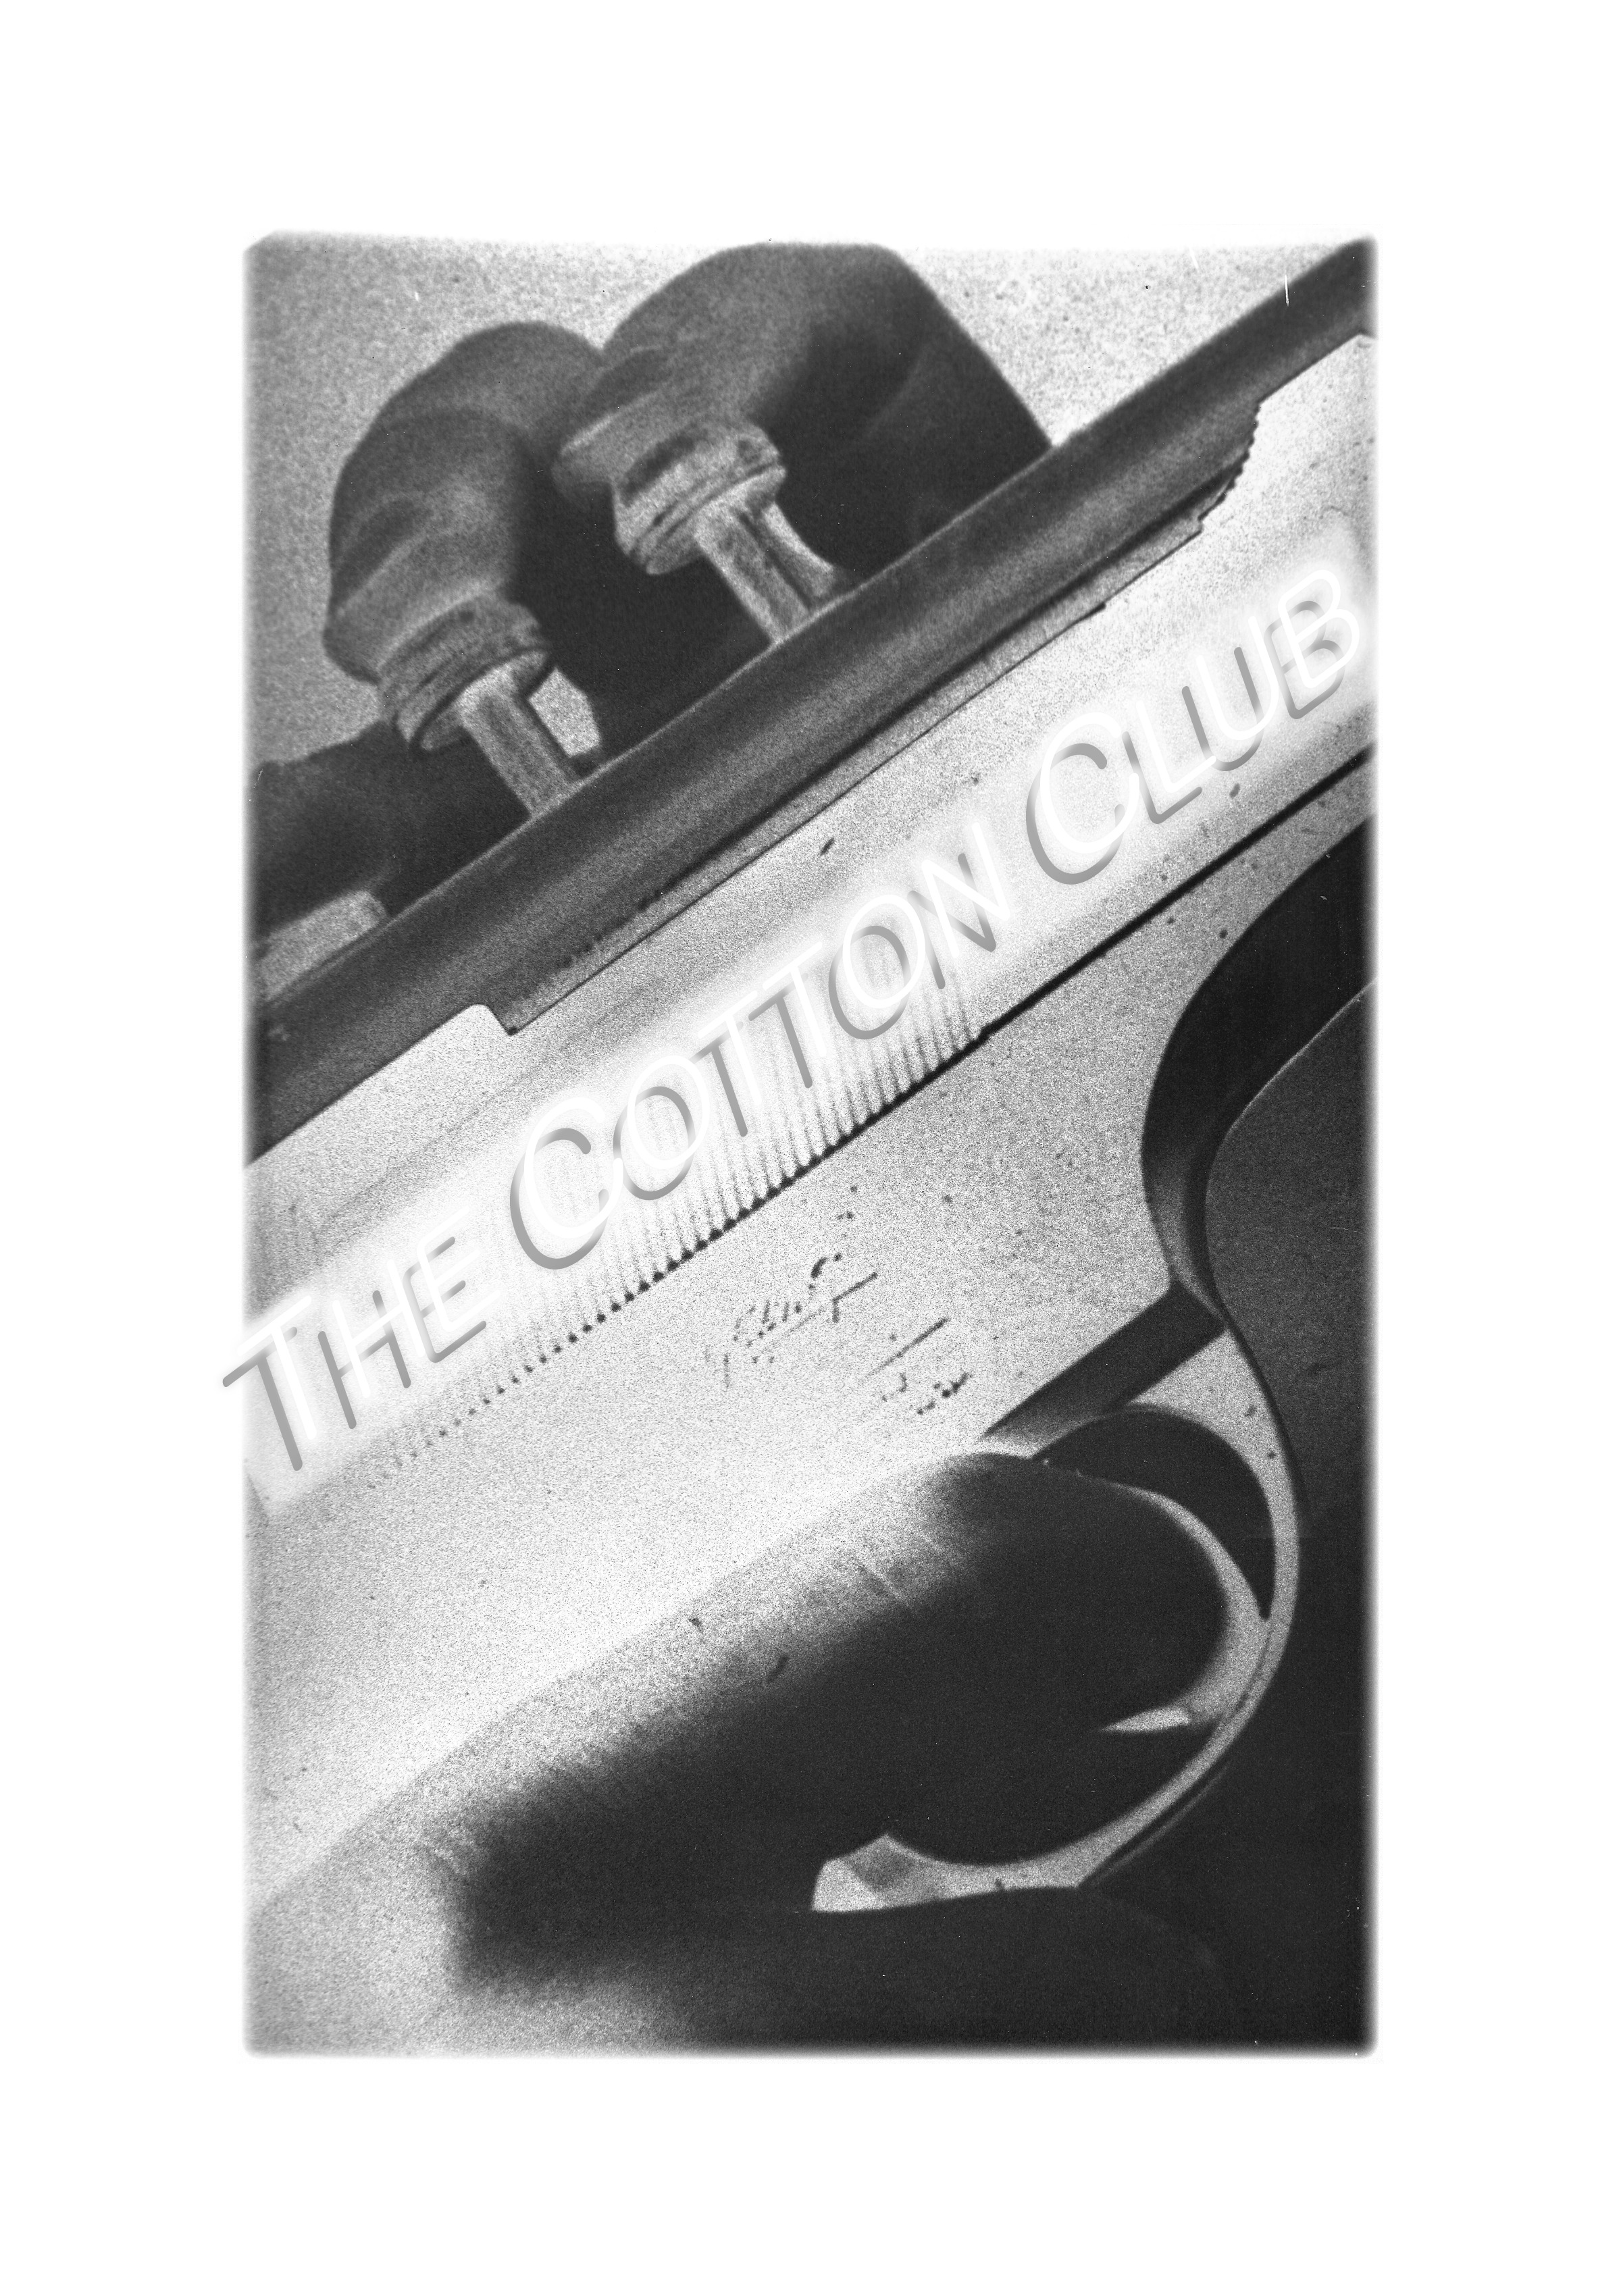 The Cotton Club poster design by Gary Gutierrez